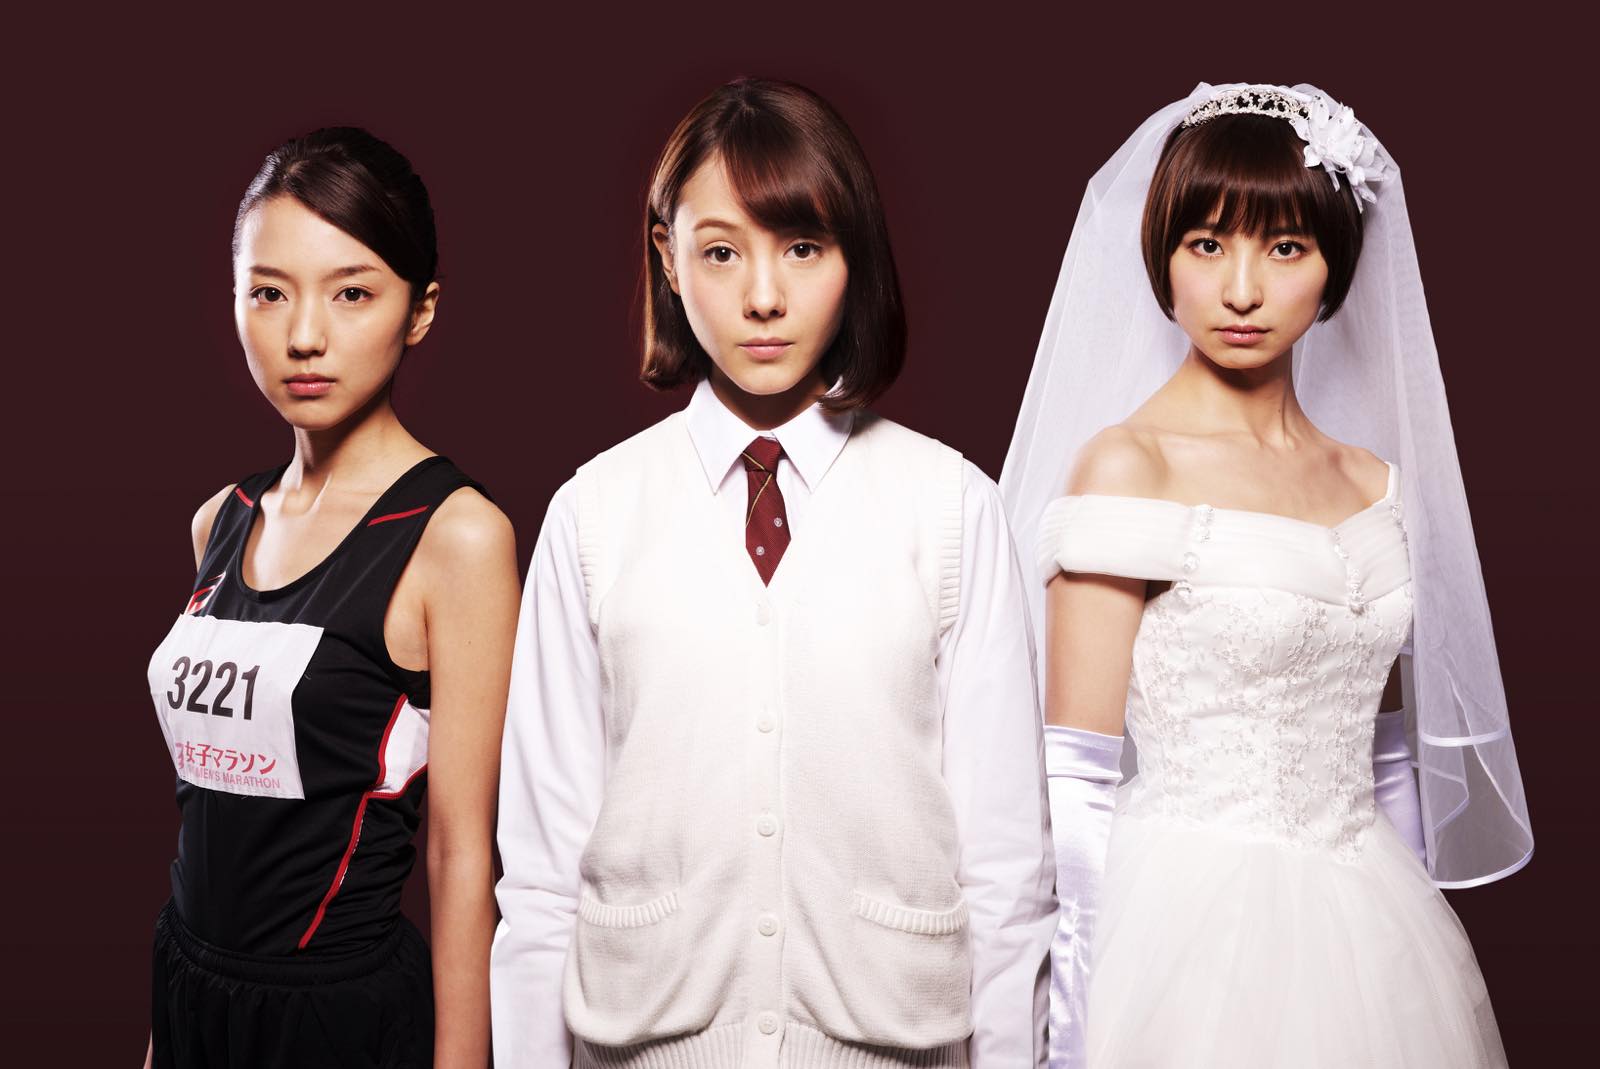 Mariko Shinoda, Erina Mano, and Reina Triendl Run For Their Lives in the MV for “Real Onigokko”!